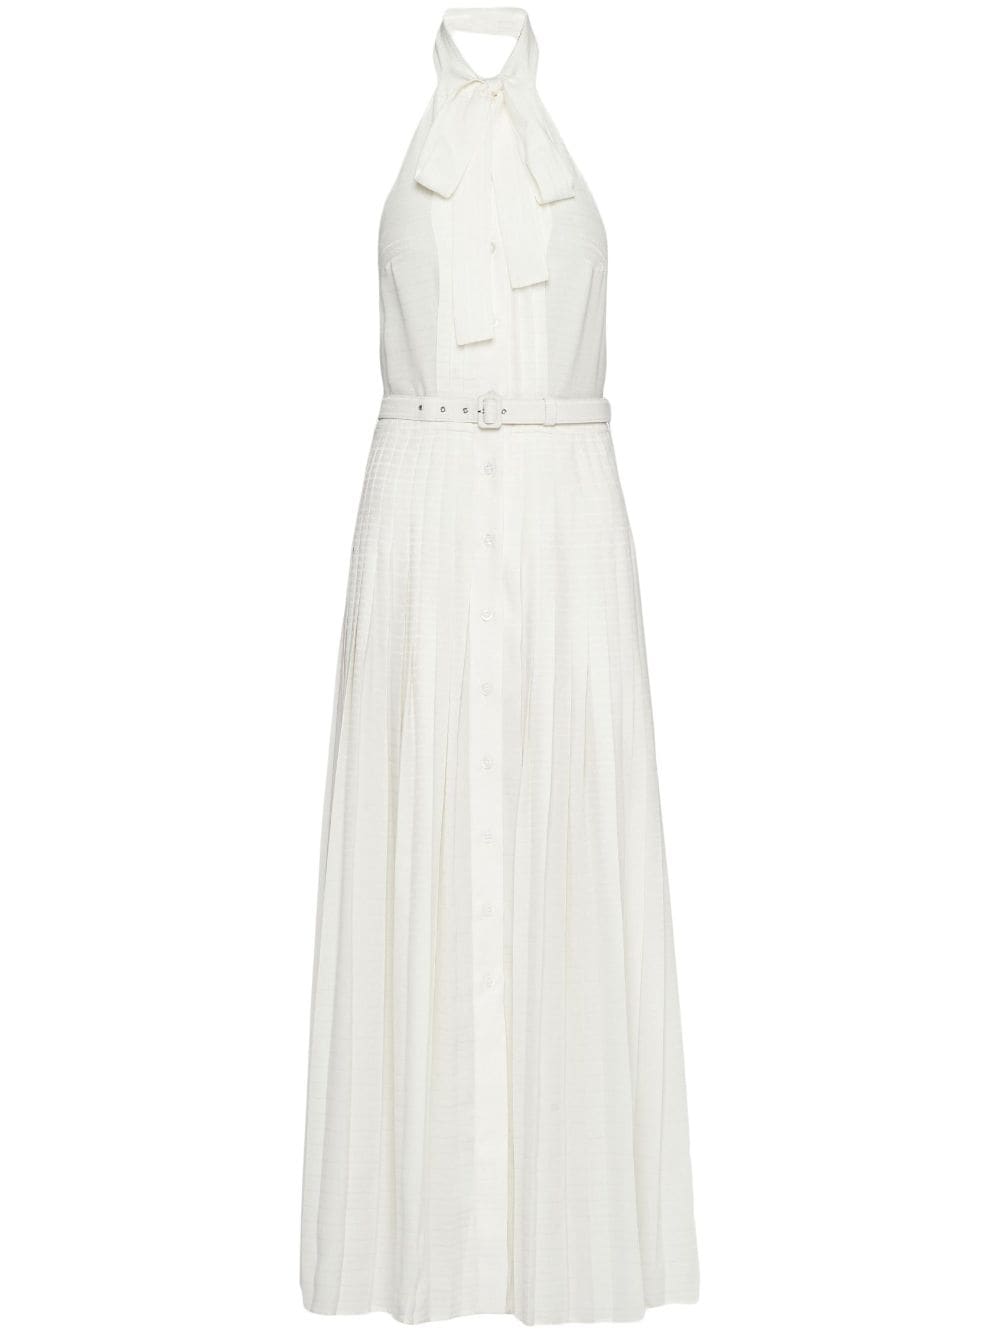 Prada jacquard pleated dress - White